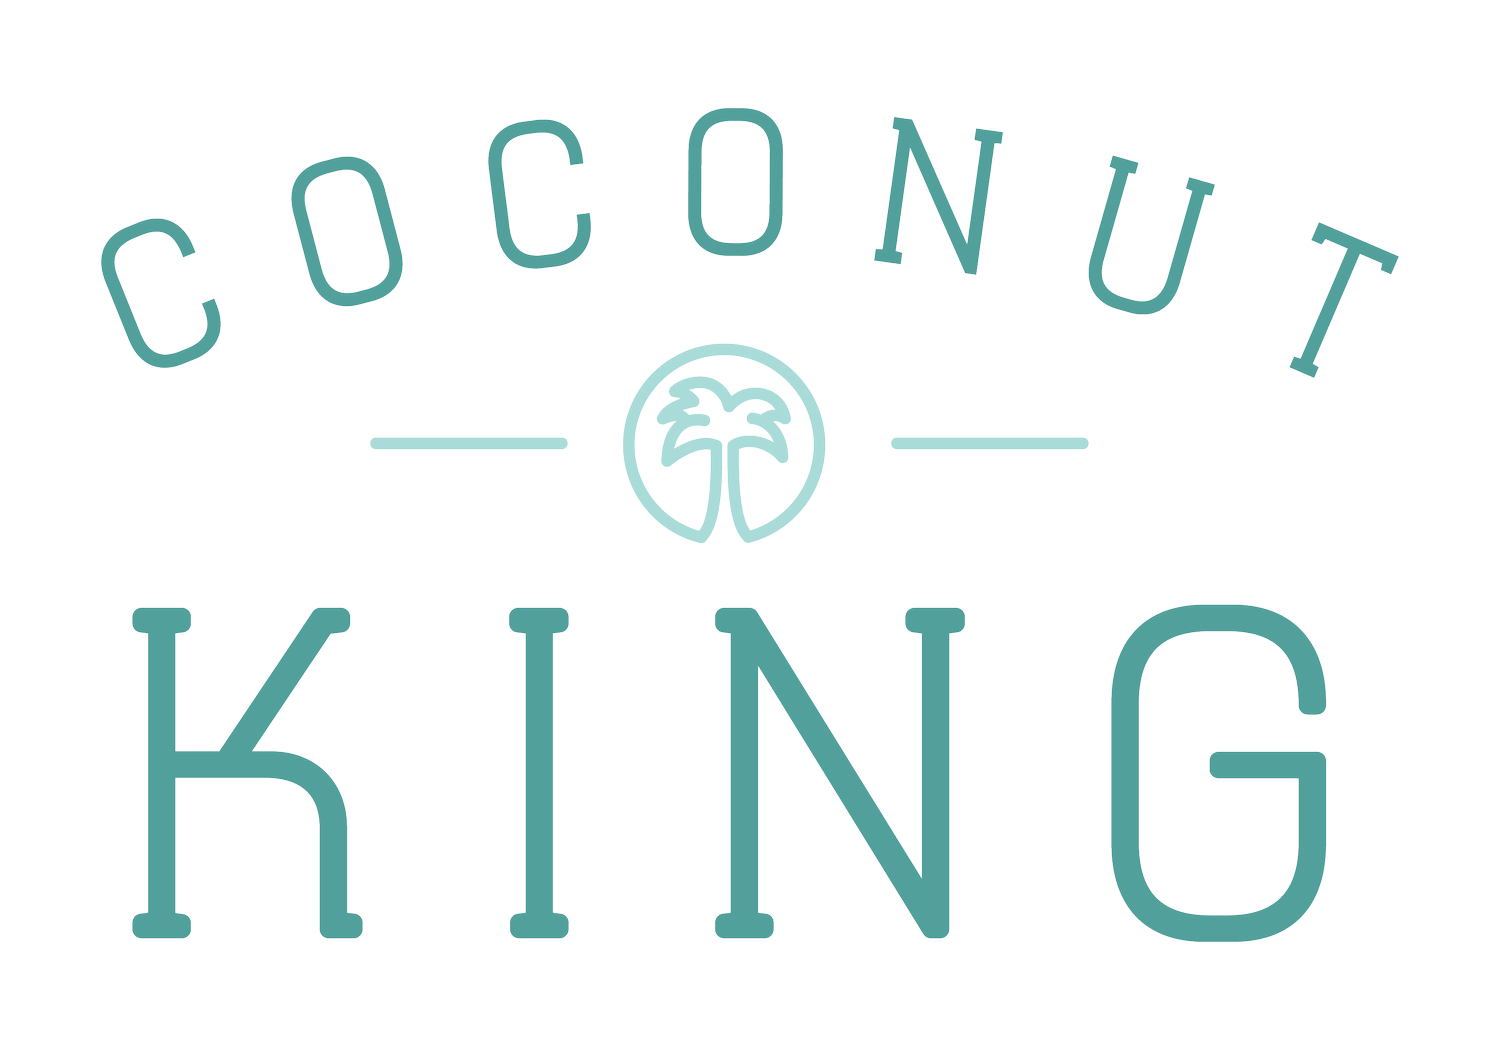 Coconut King